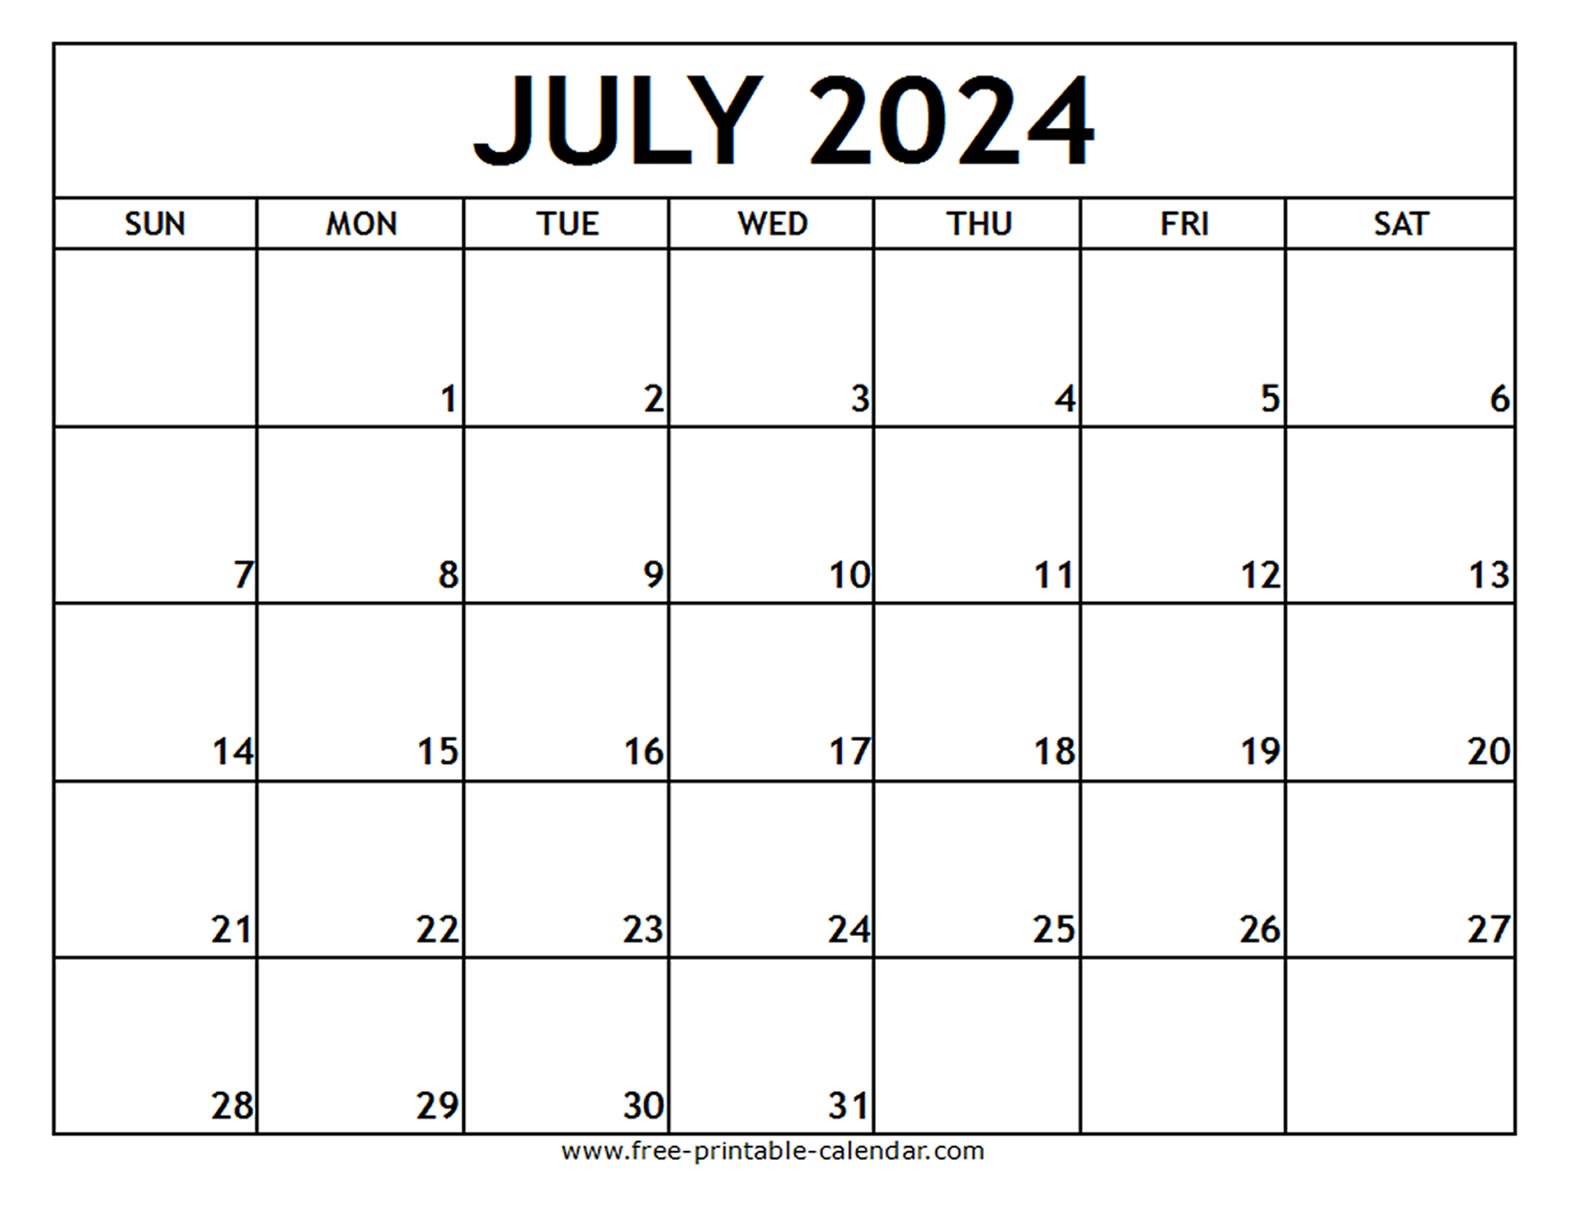 July 2024 Printable Calendar - Free-Printable-Calendar inside Free Printable Calendar 2024 July August